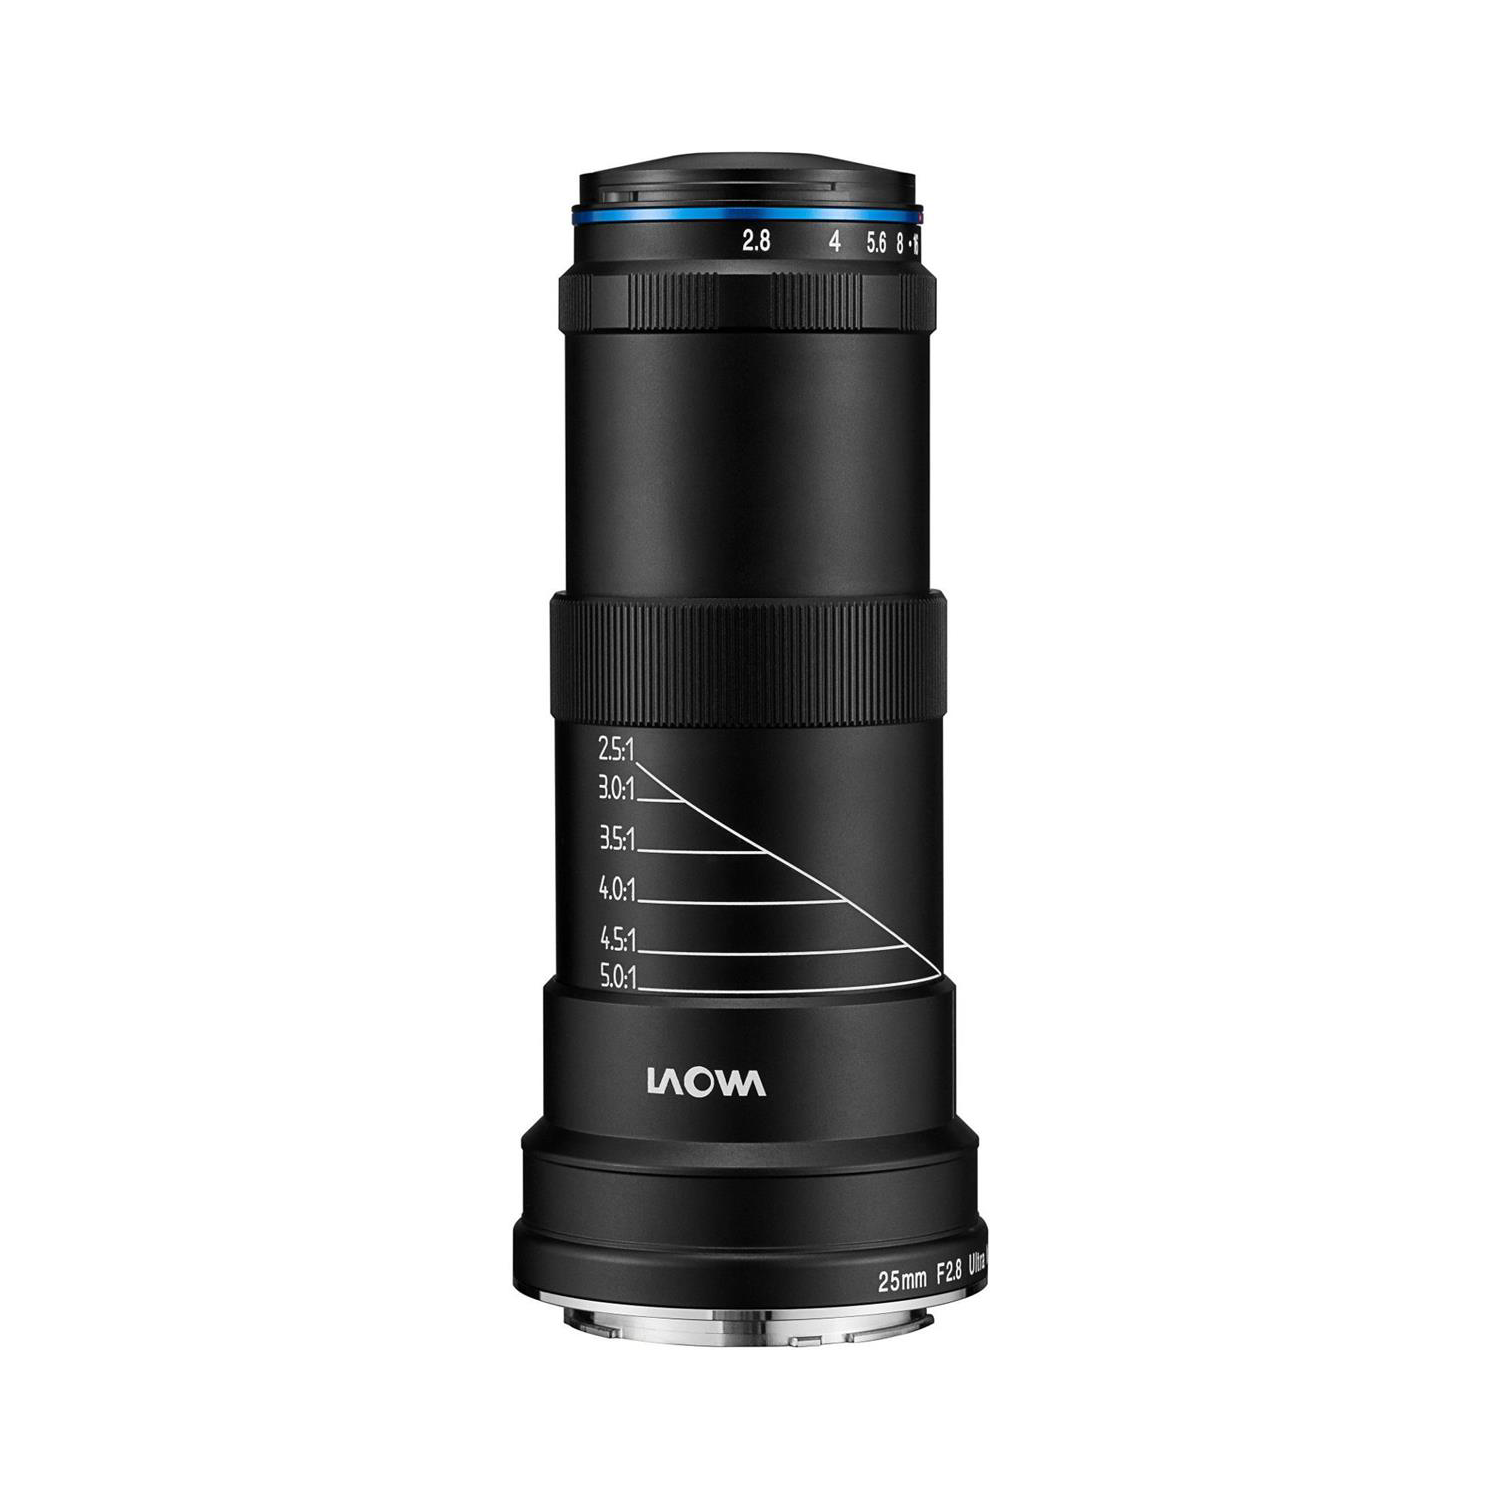 Laowa 25mm f/2.8 2.5-5X Ultra-Macro Lens for Nikon F